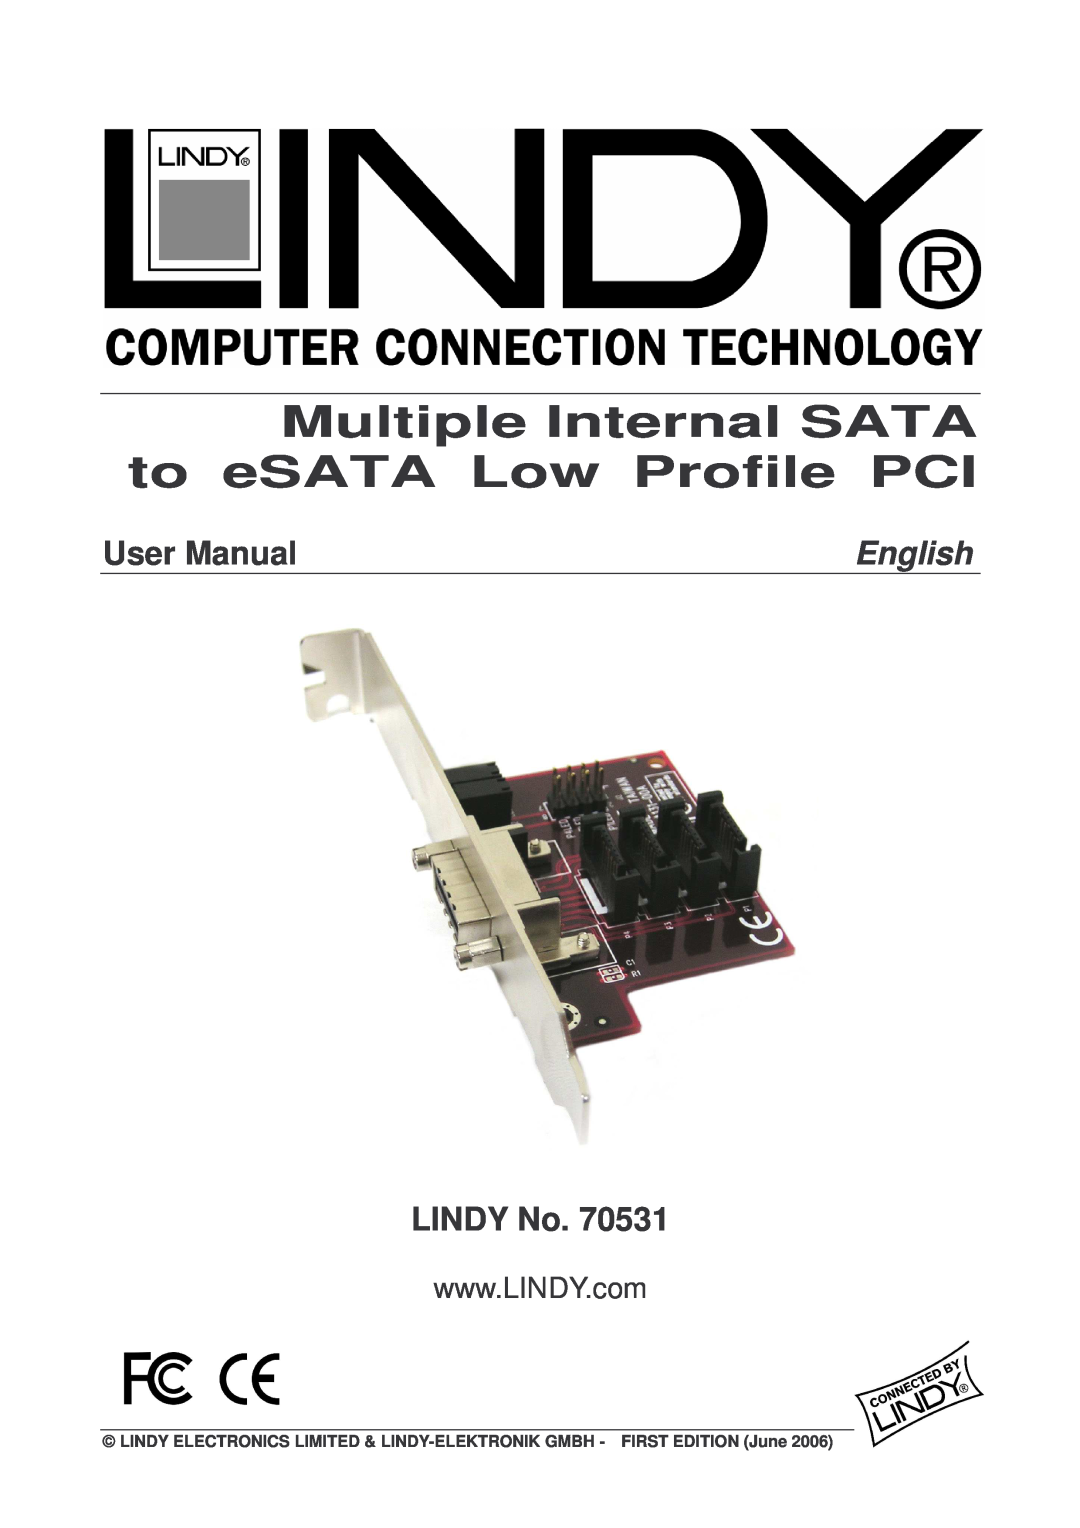 Lindy 70531 user manual LINDY No, Multiple Internal SATA to eSATA Low Profile PCI, User Manual, English 